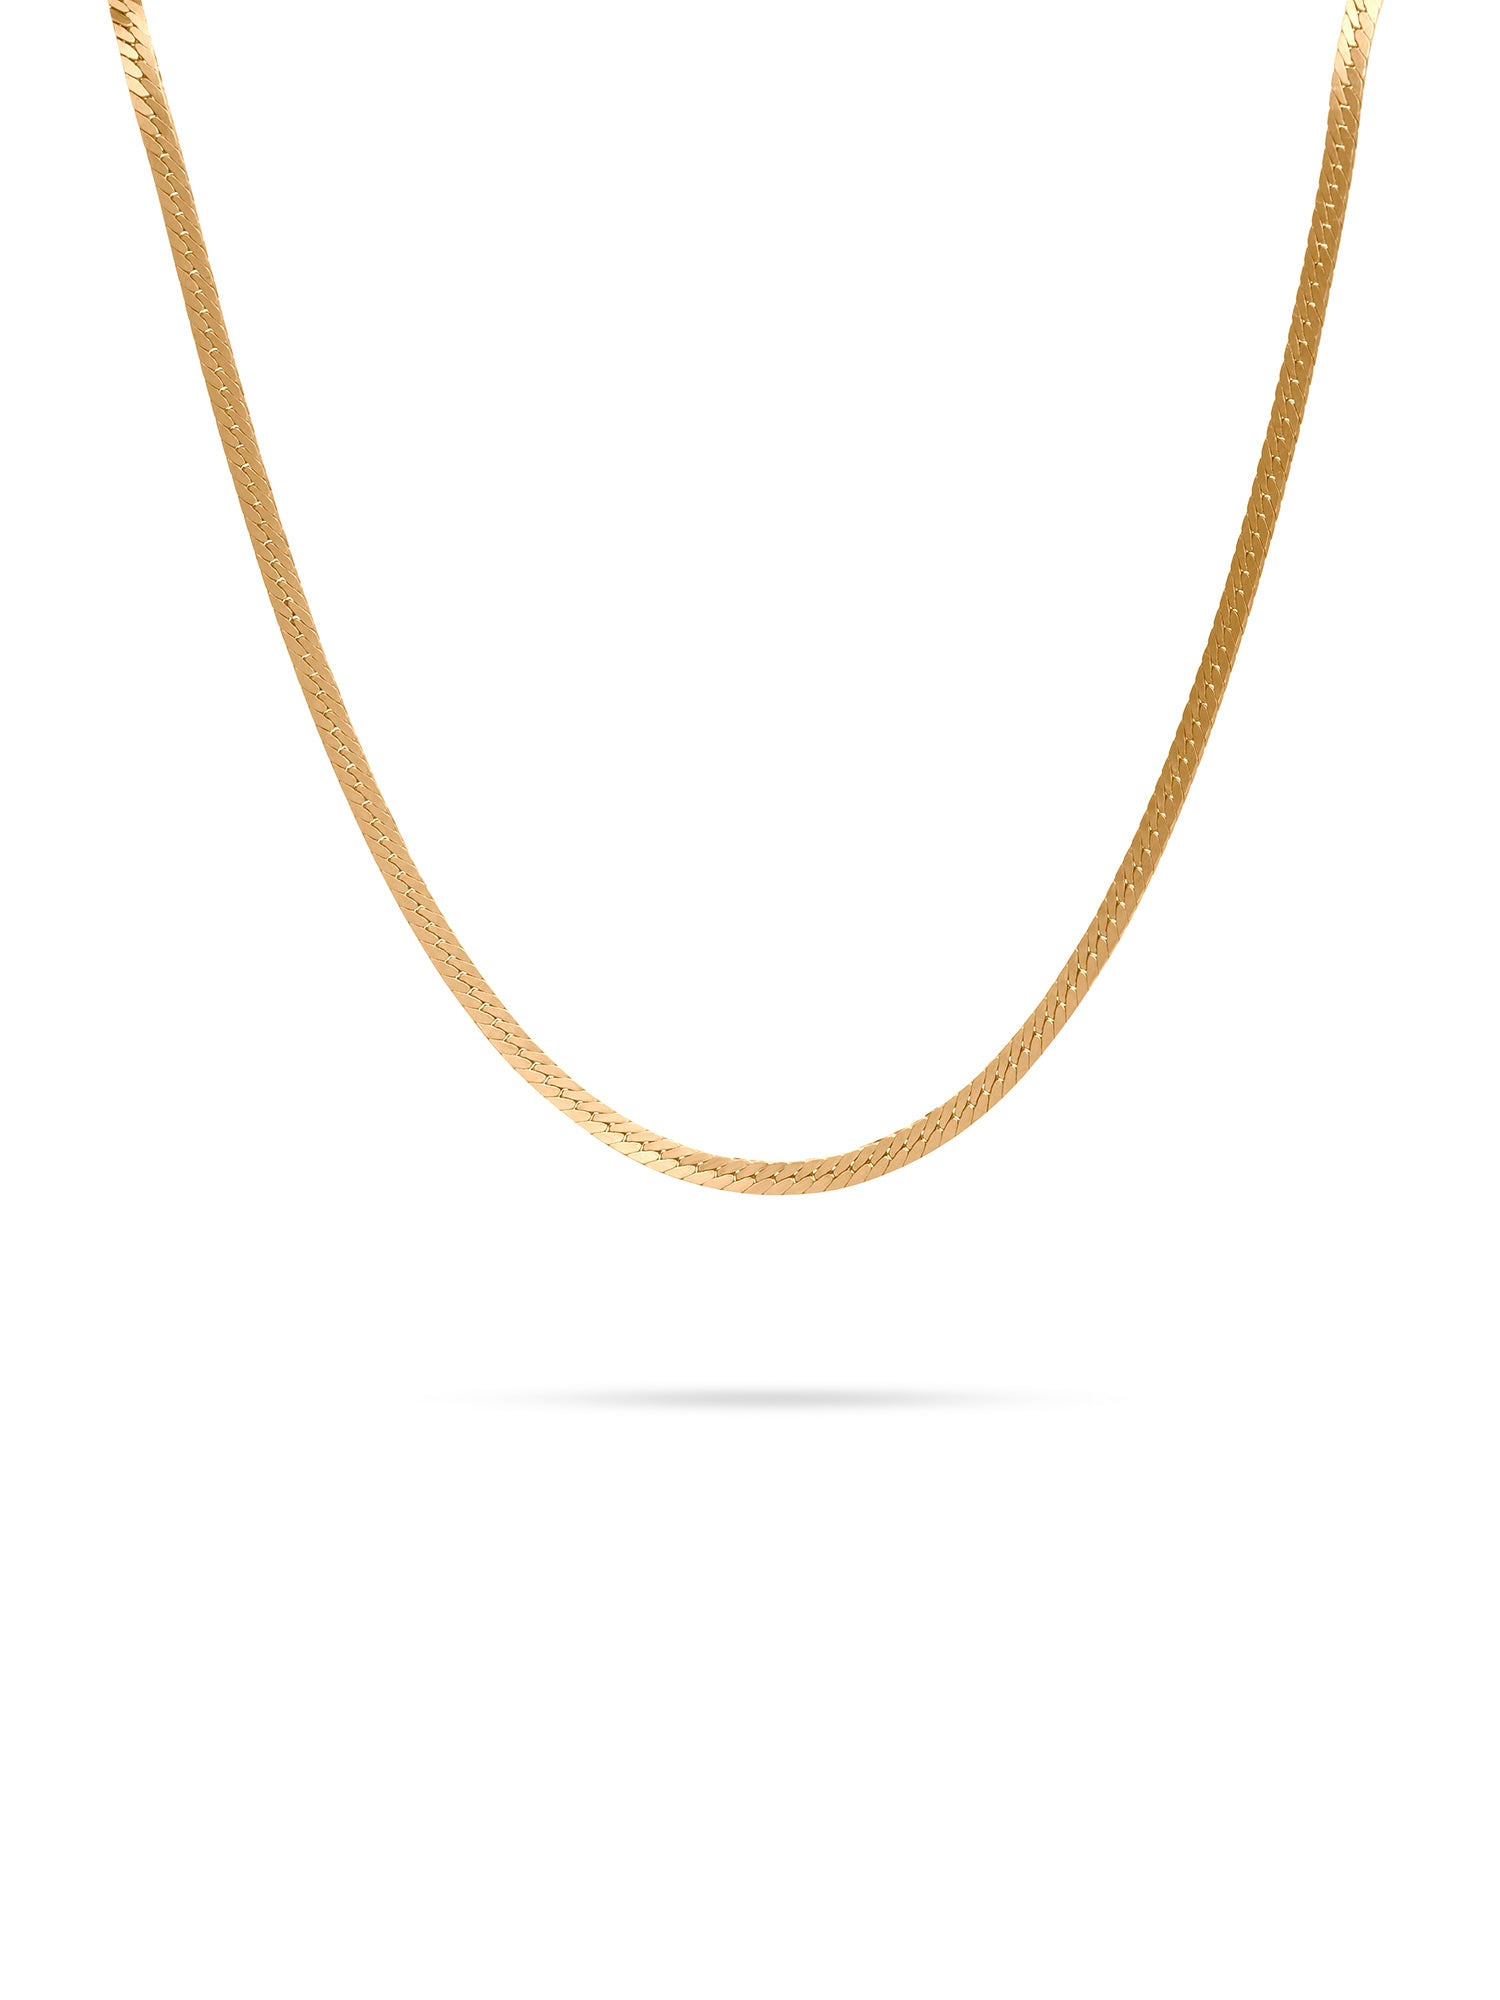 Super Fine Herringbone Necklace 16"